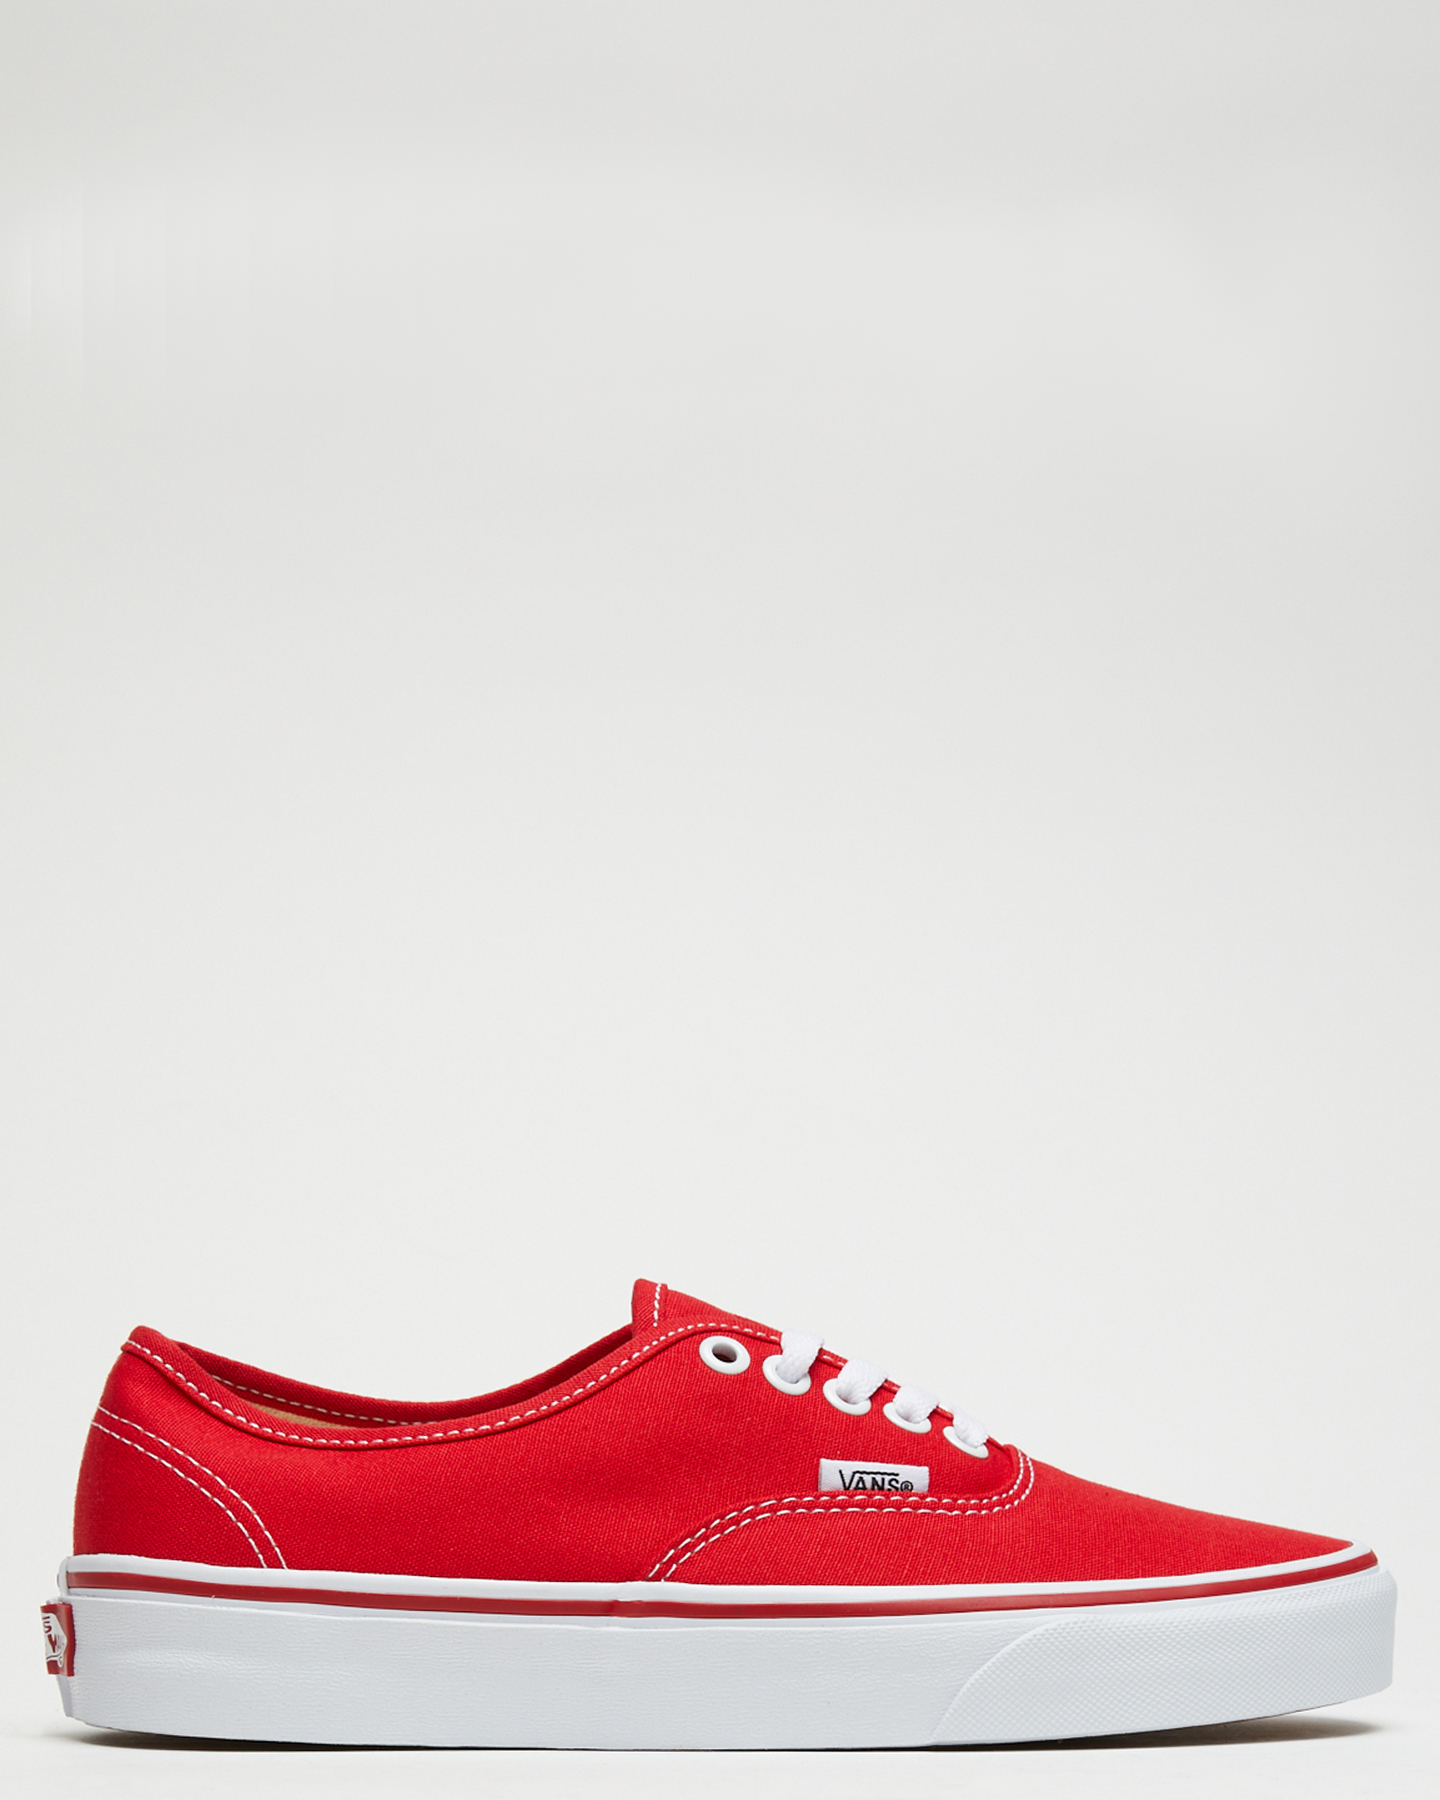 Vans Authentic Shoe - Red |